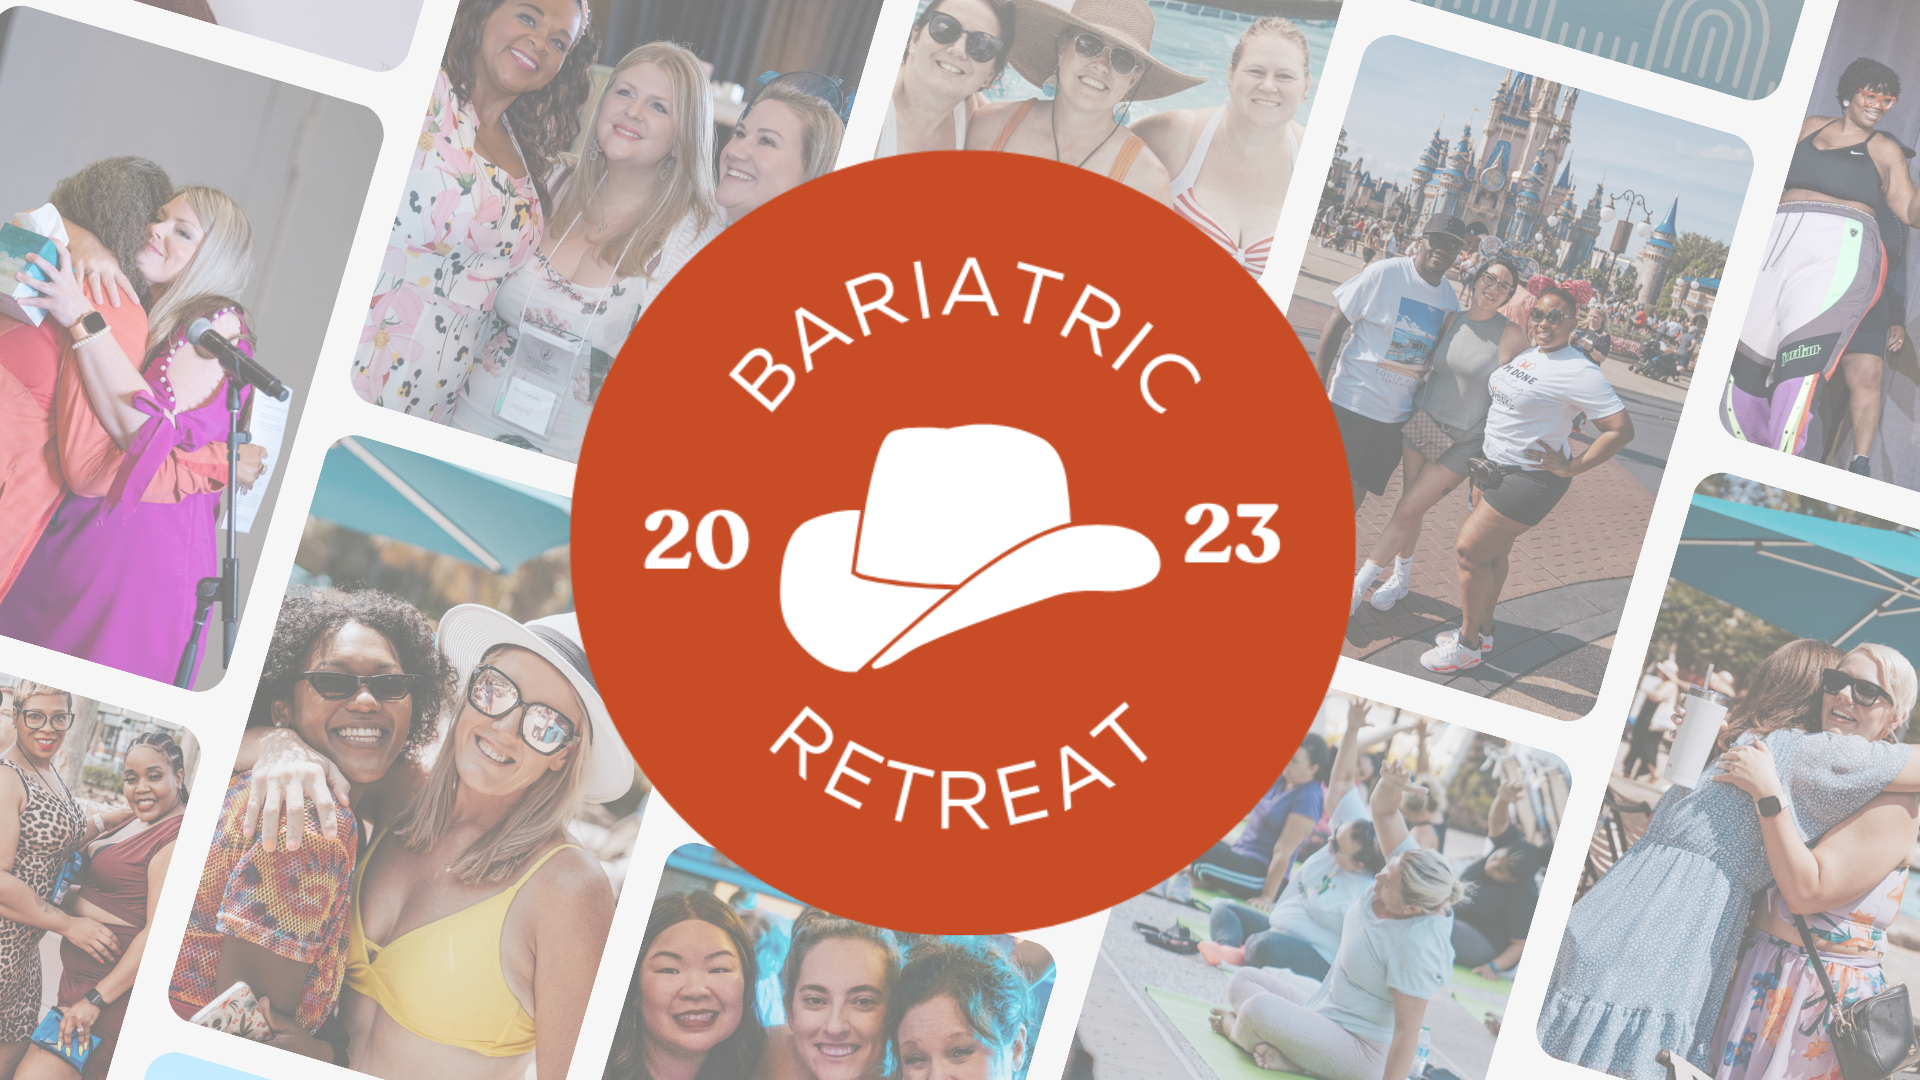 2023 bariatric retreat